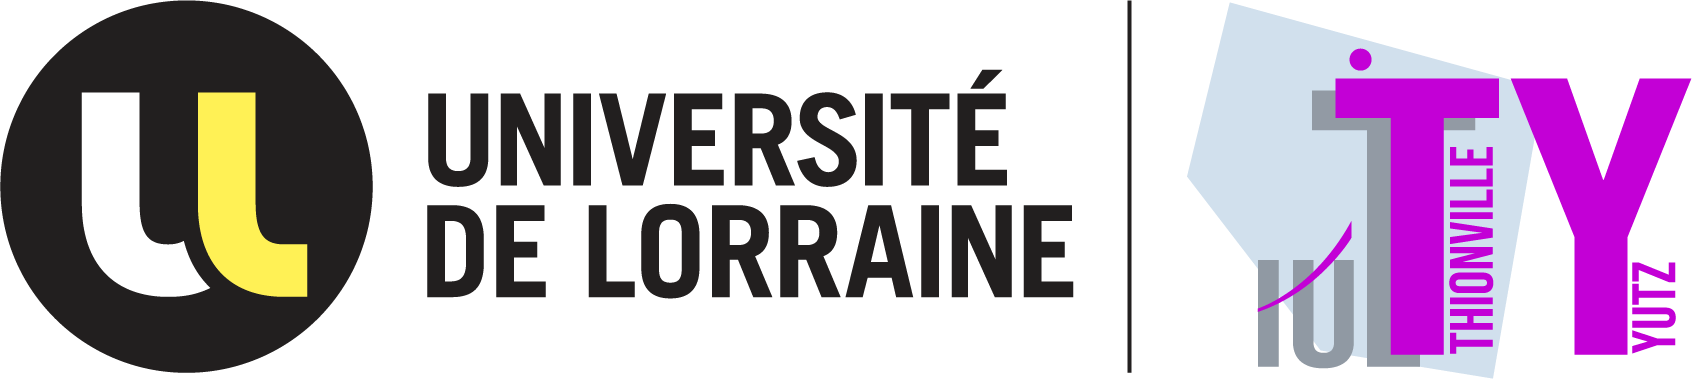 logo_UL-IUT-Thionville-Yutz